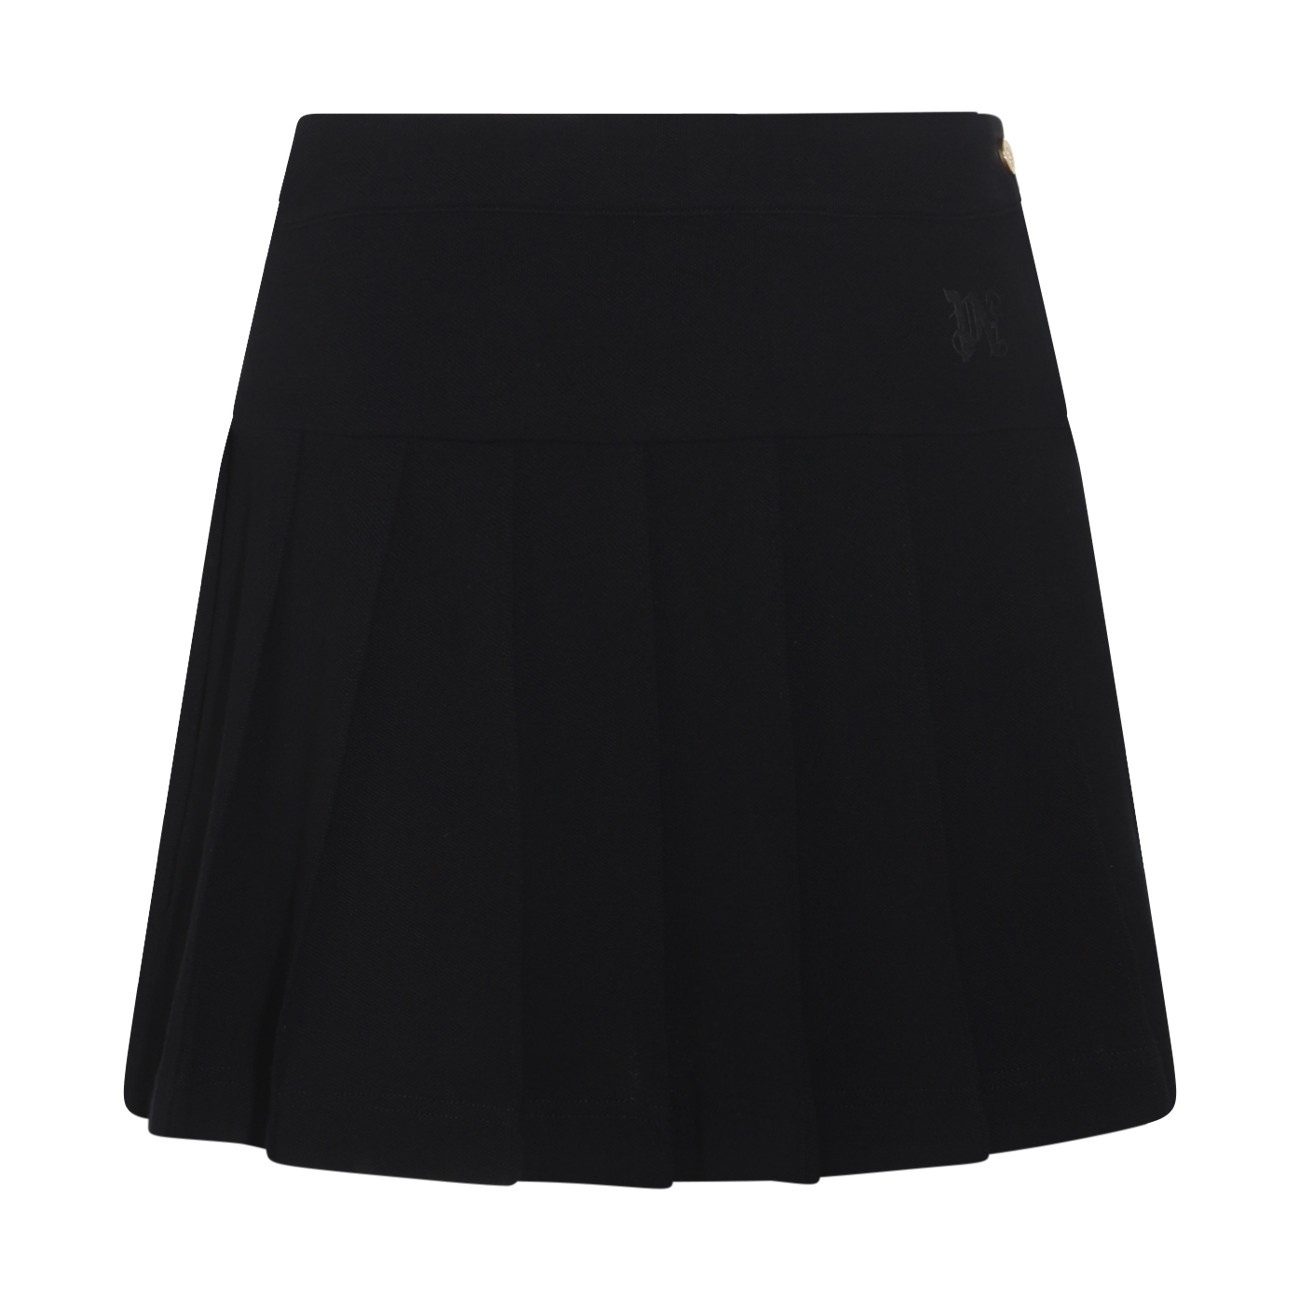 black cotton skirt - 1